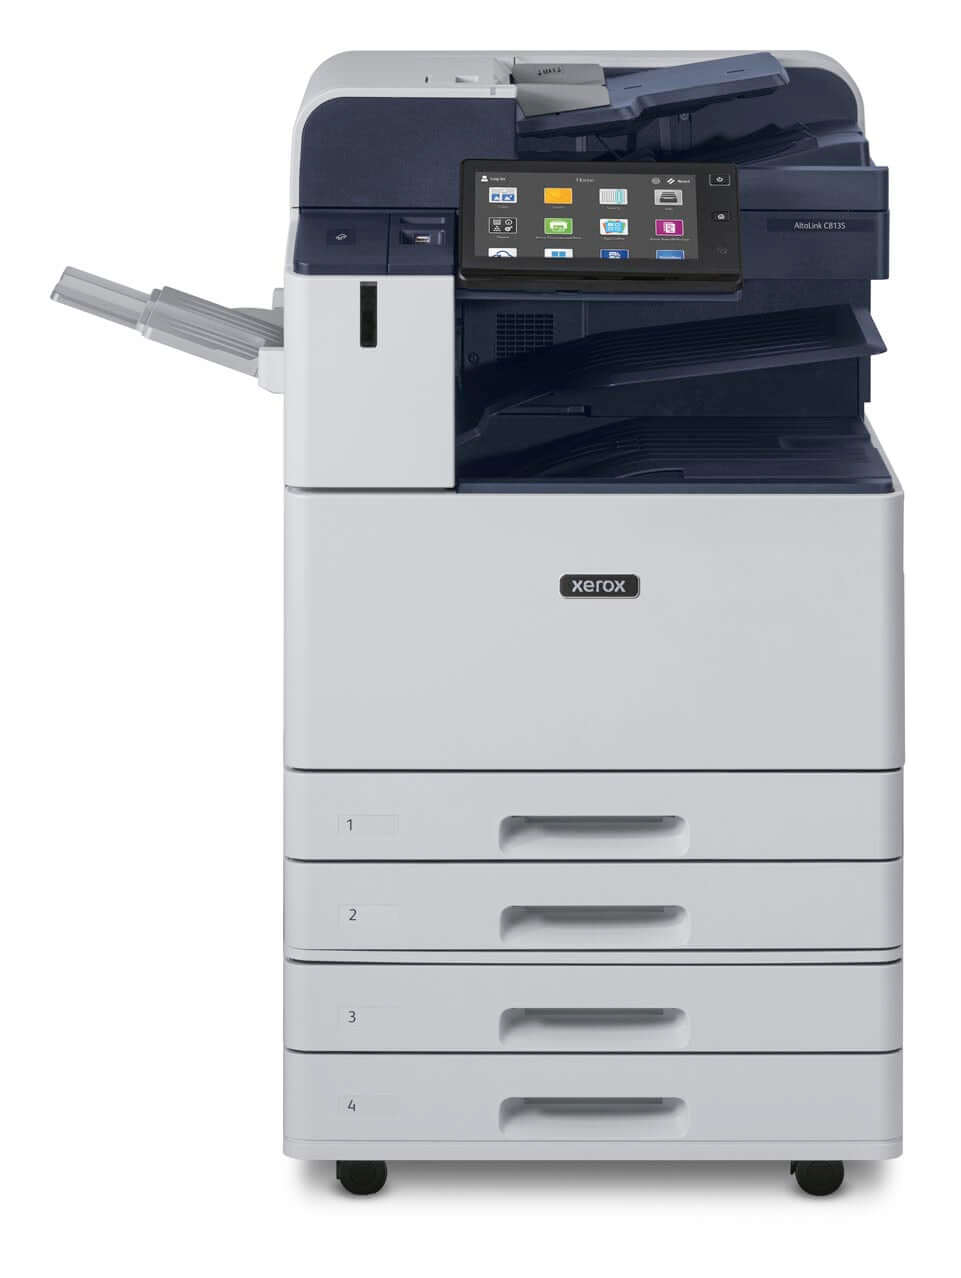 Xerox AltaLink C8130 A3 Colour Multi-Function Printer - 2,180 paper capacity